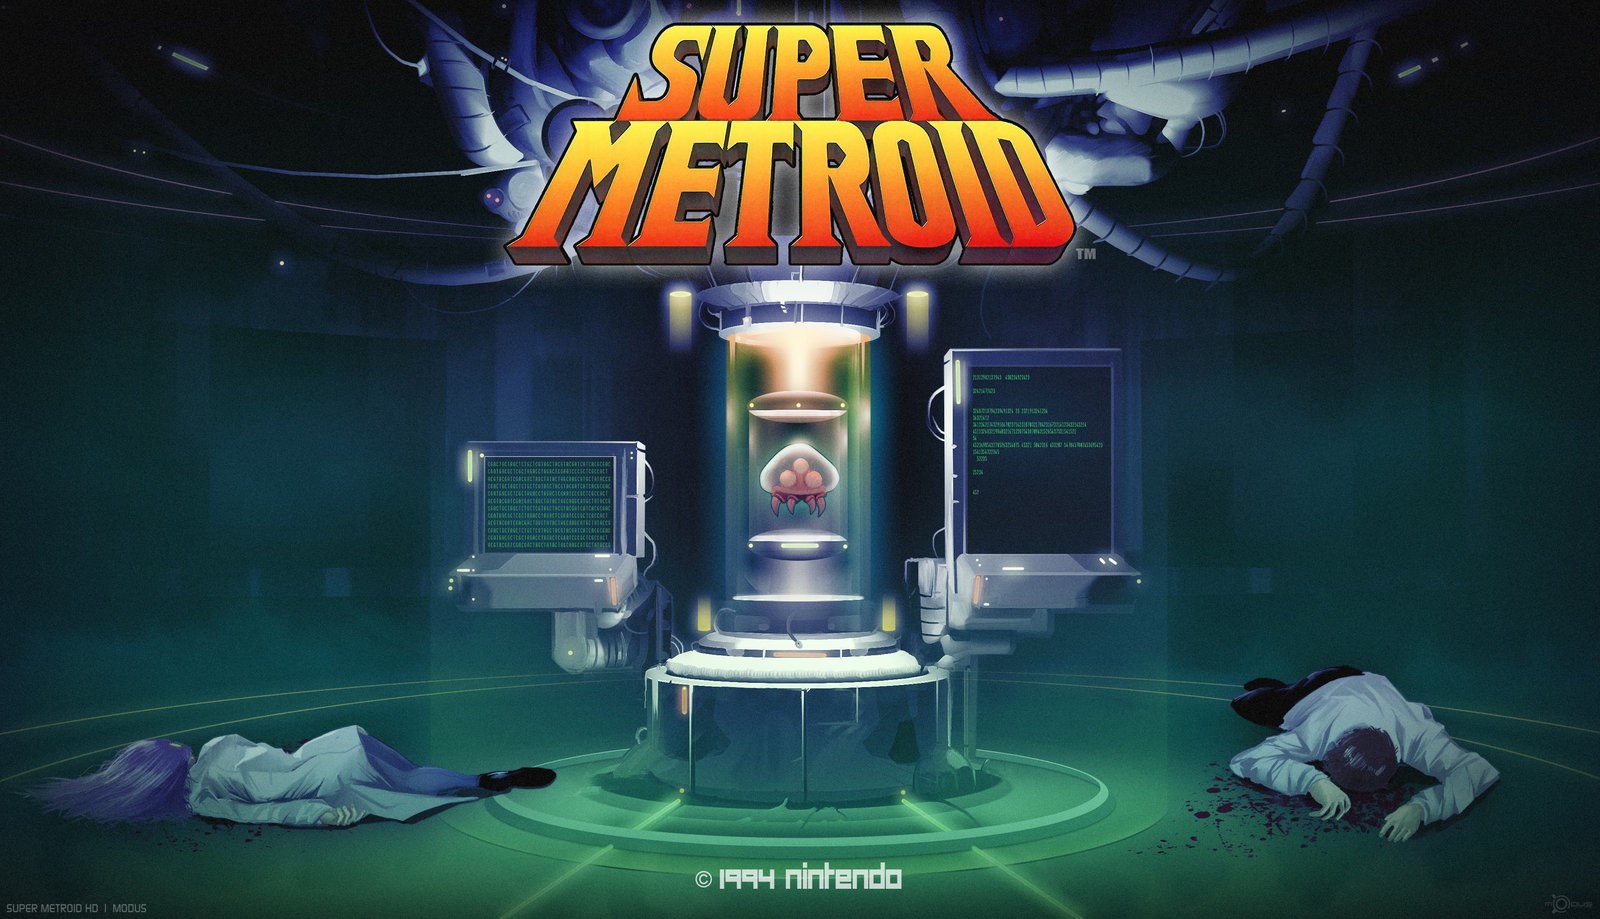 General 1600x919 video games Super Metroid Metroid Nintendo video game art 1994 (Year)